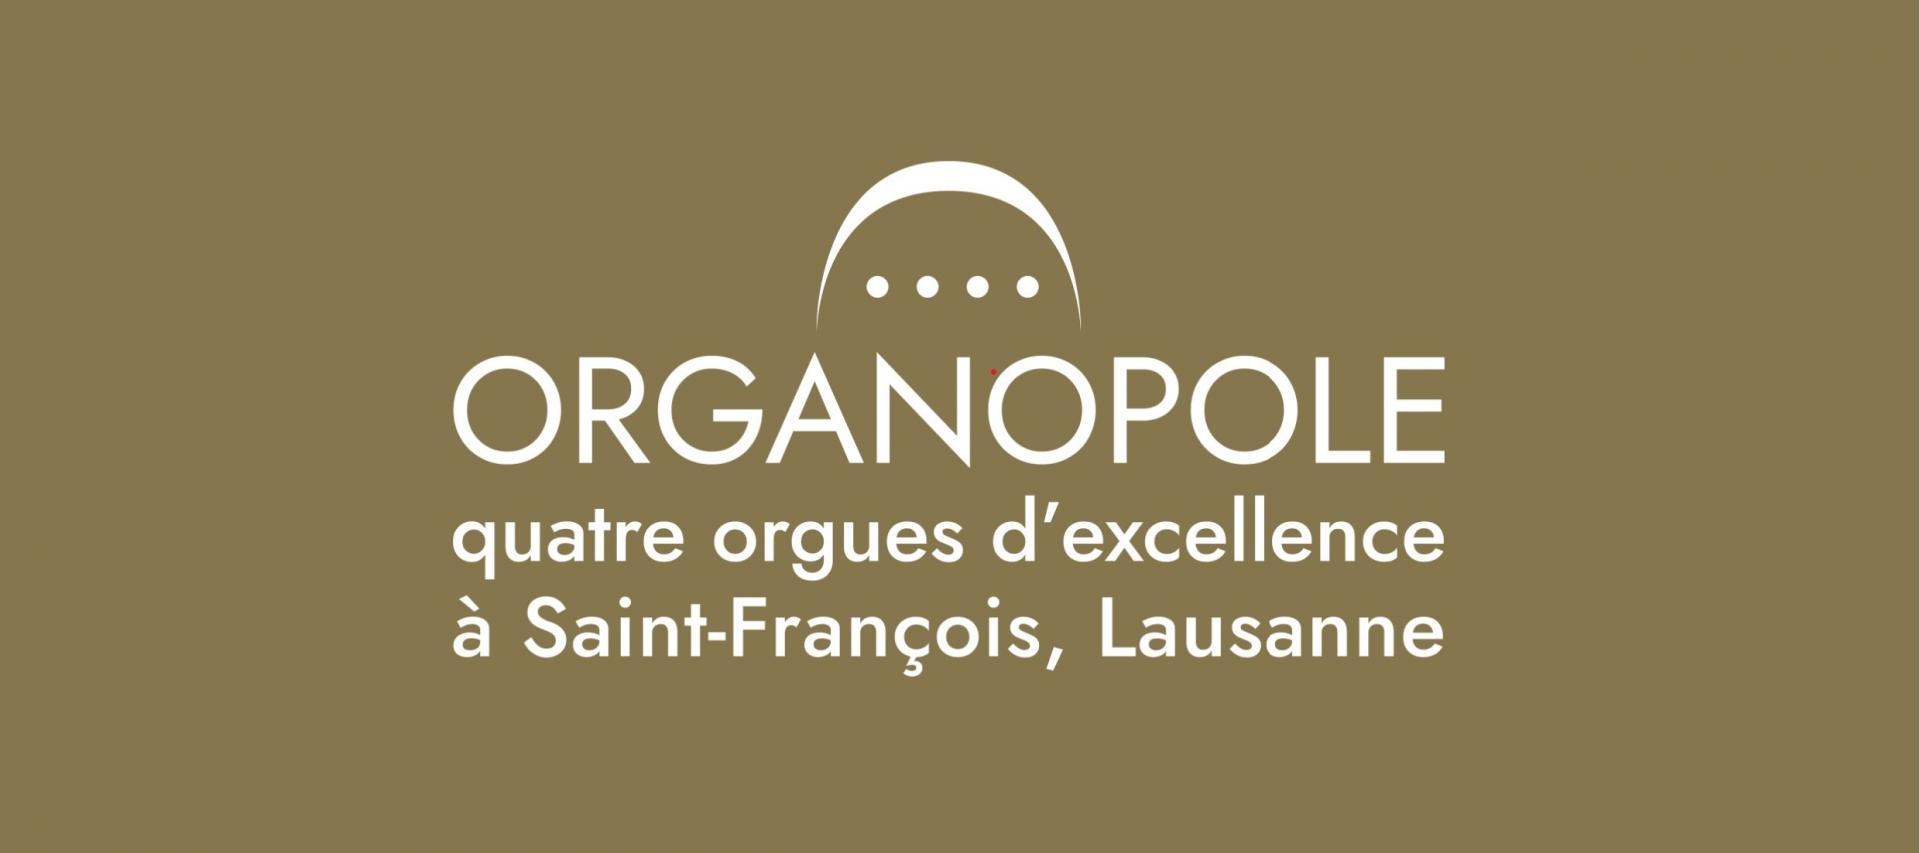 Organopole